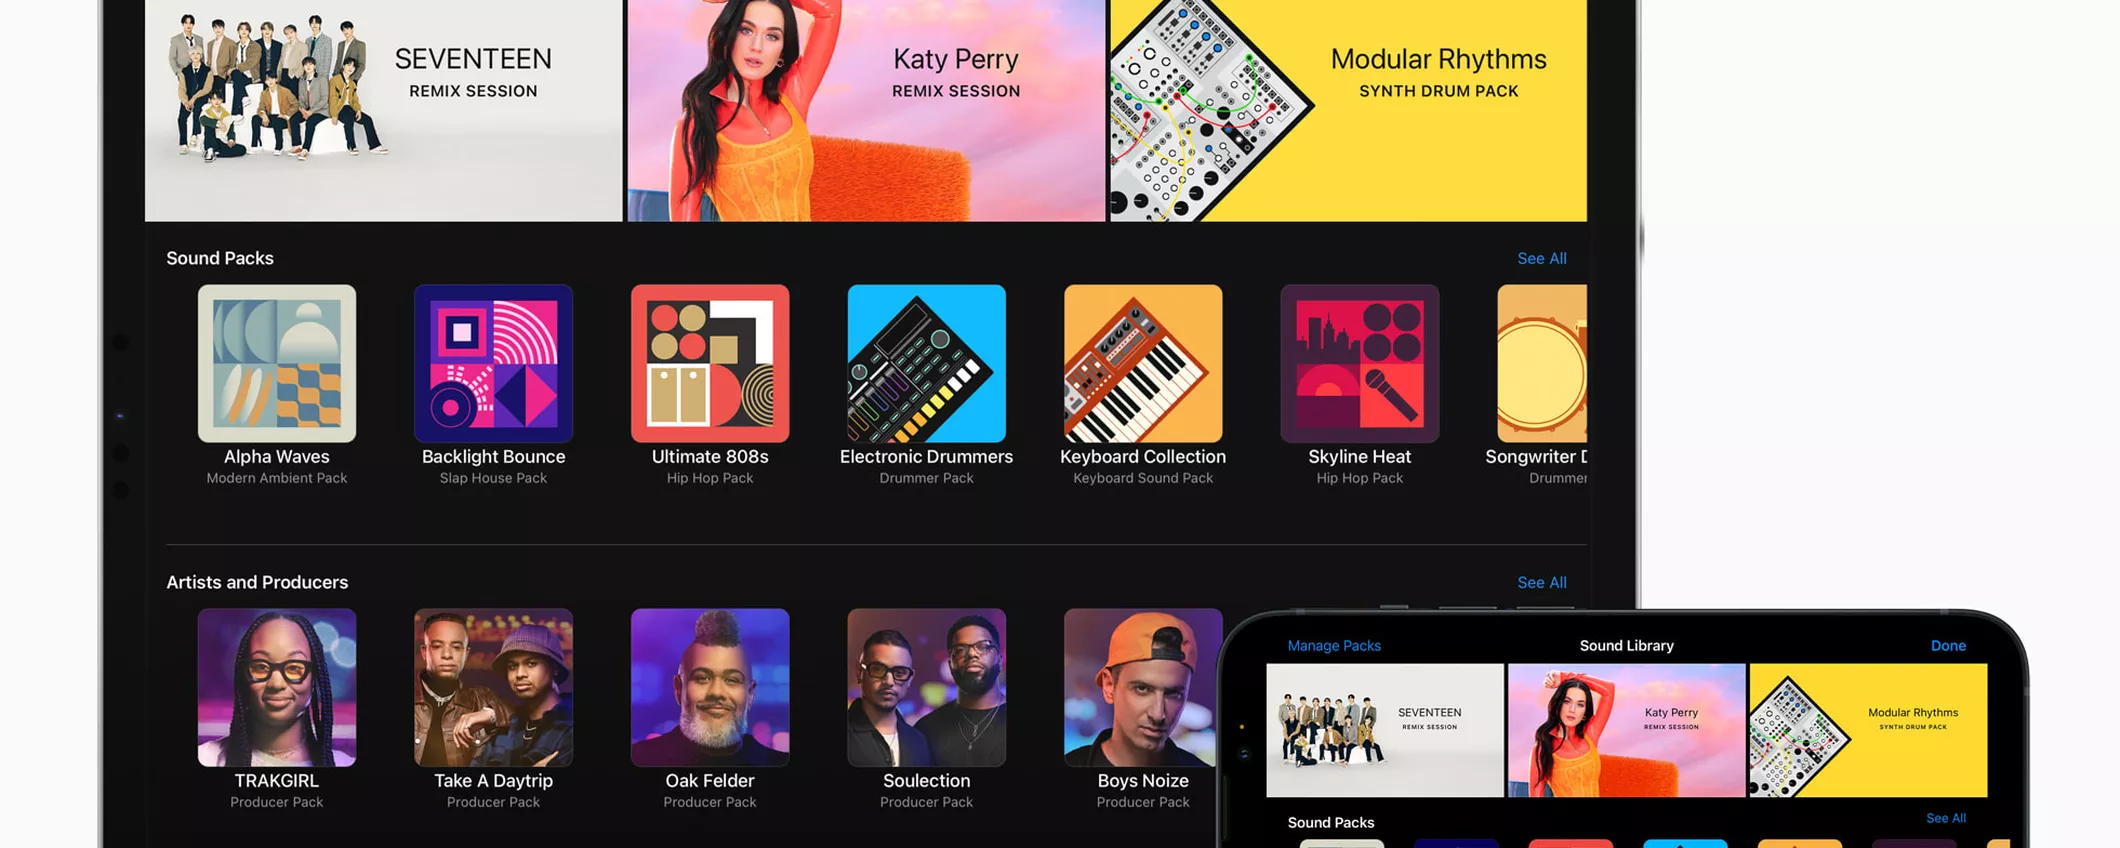 GarageBand, arrivano i remix con Katy Perry e il gruppo K-pop SEVENTEEN